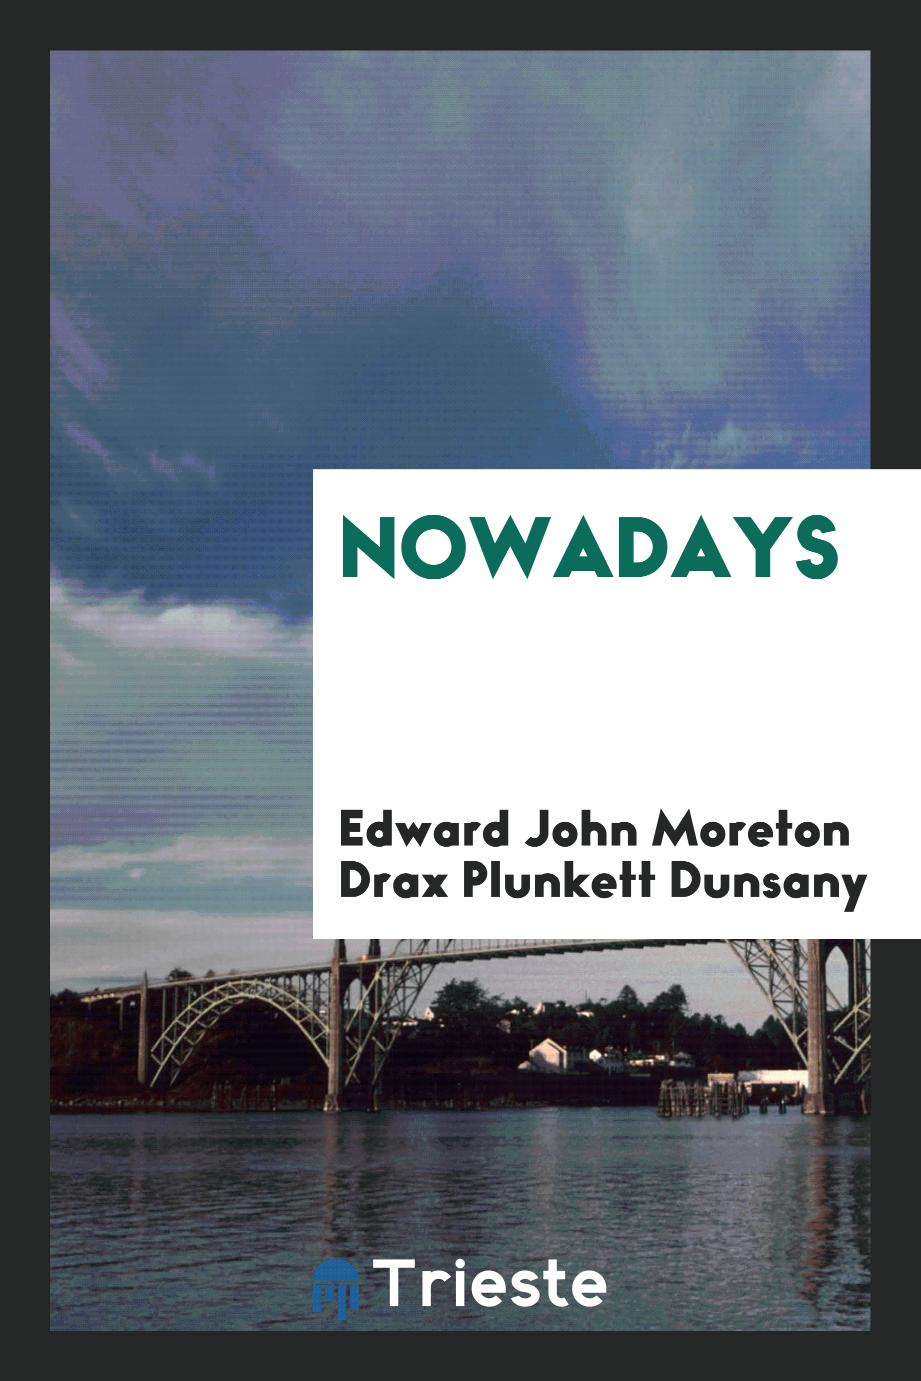 Edward John Moreton Drax Plunkett Dunsany - Nowadays